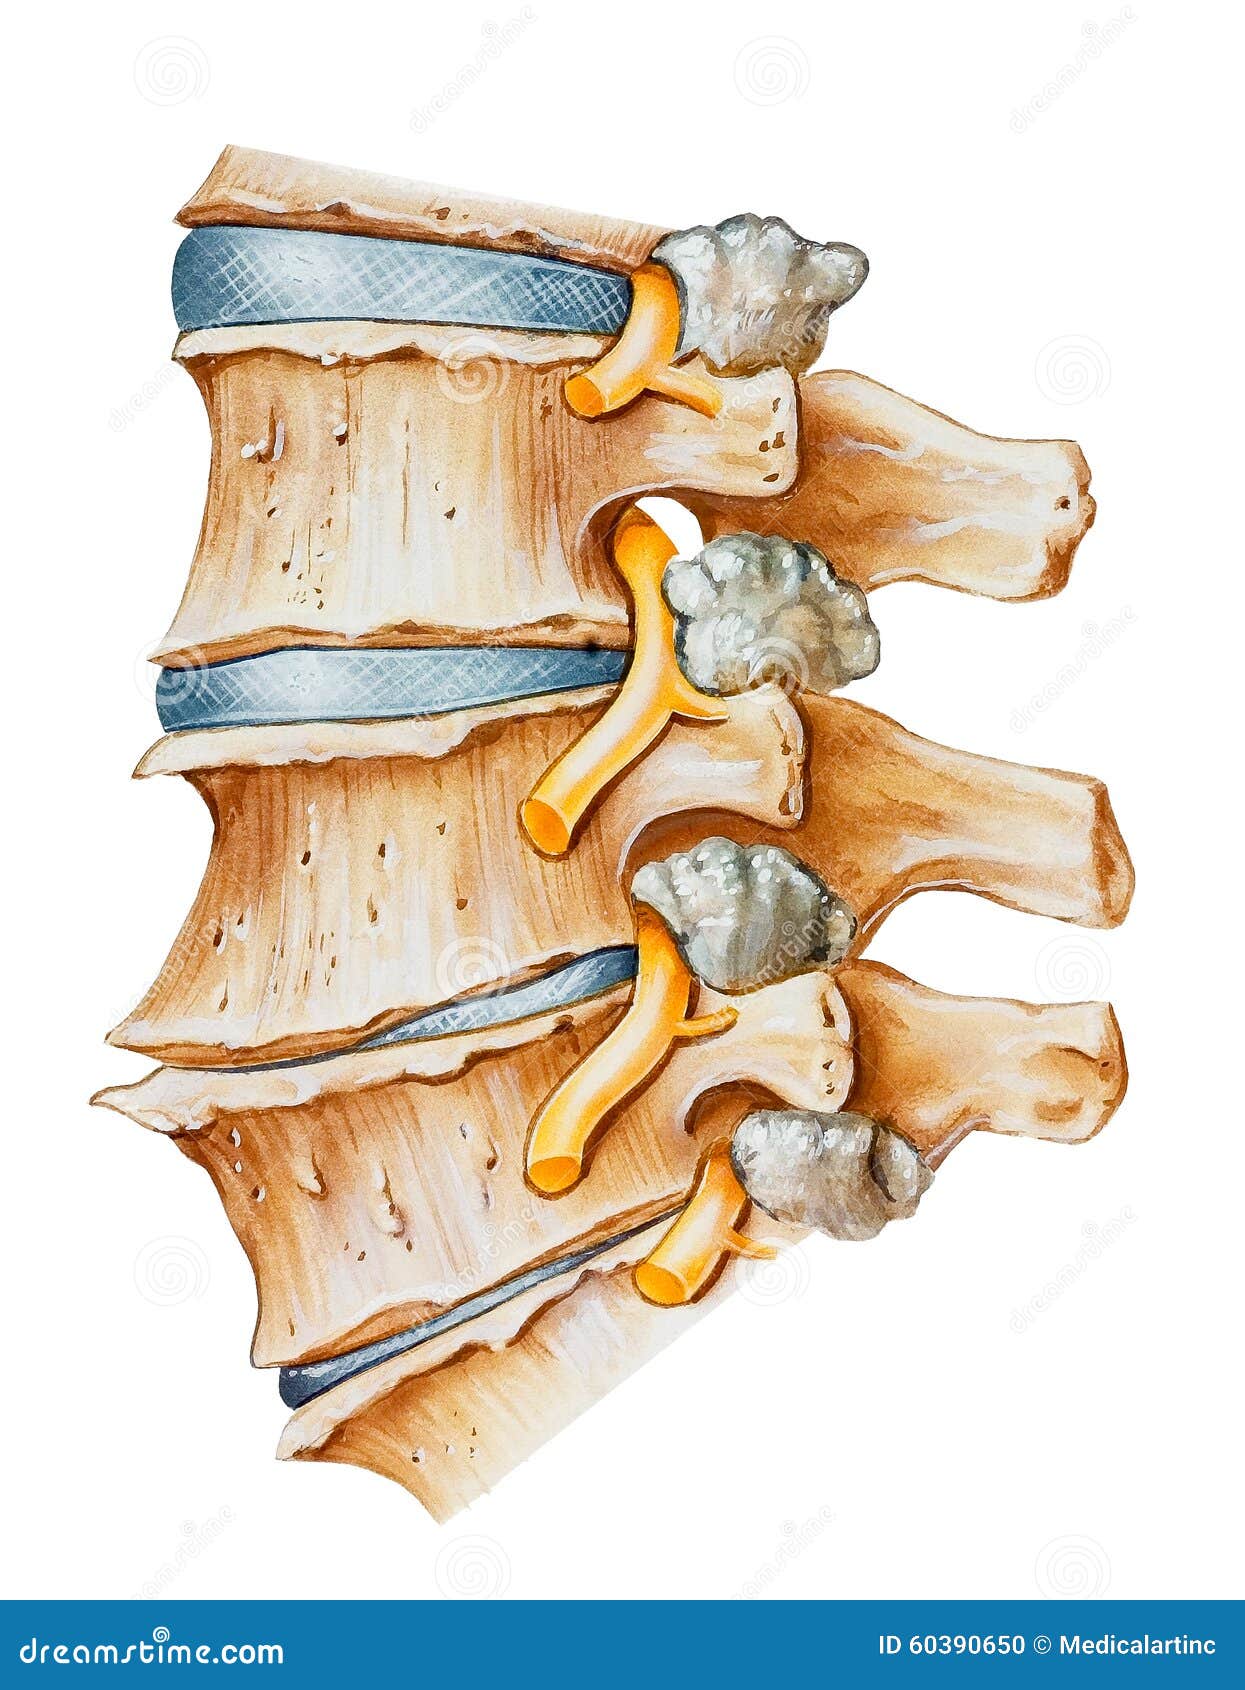 spine - lumbar osteoarthritic and spondylitic arthritis